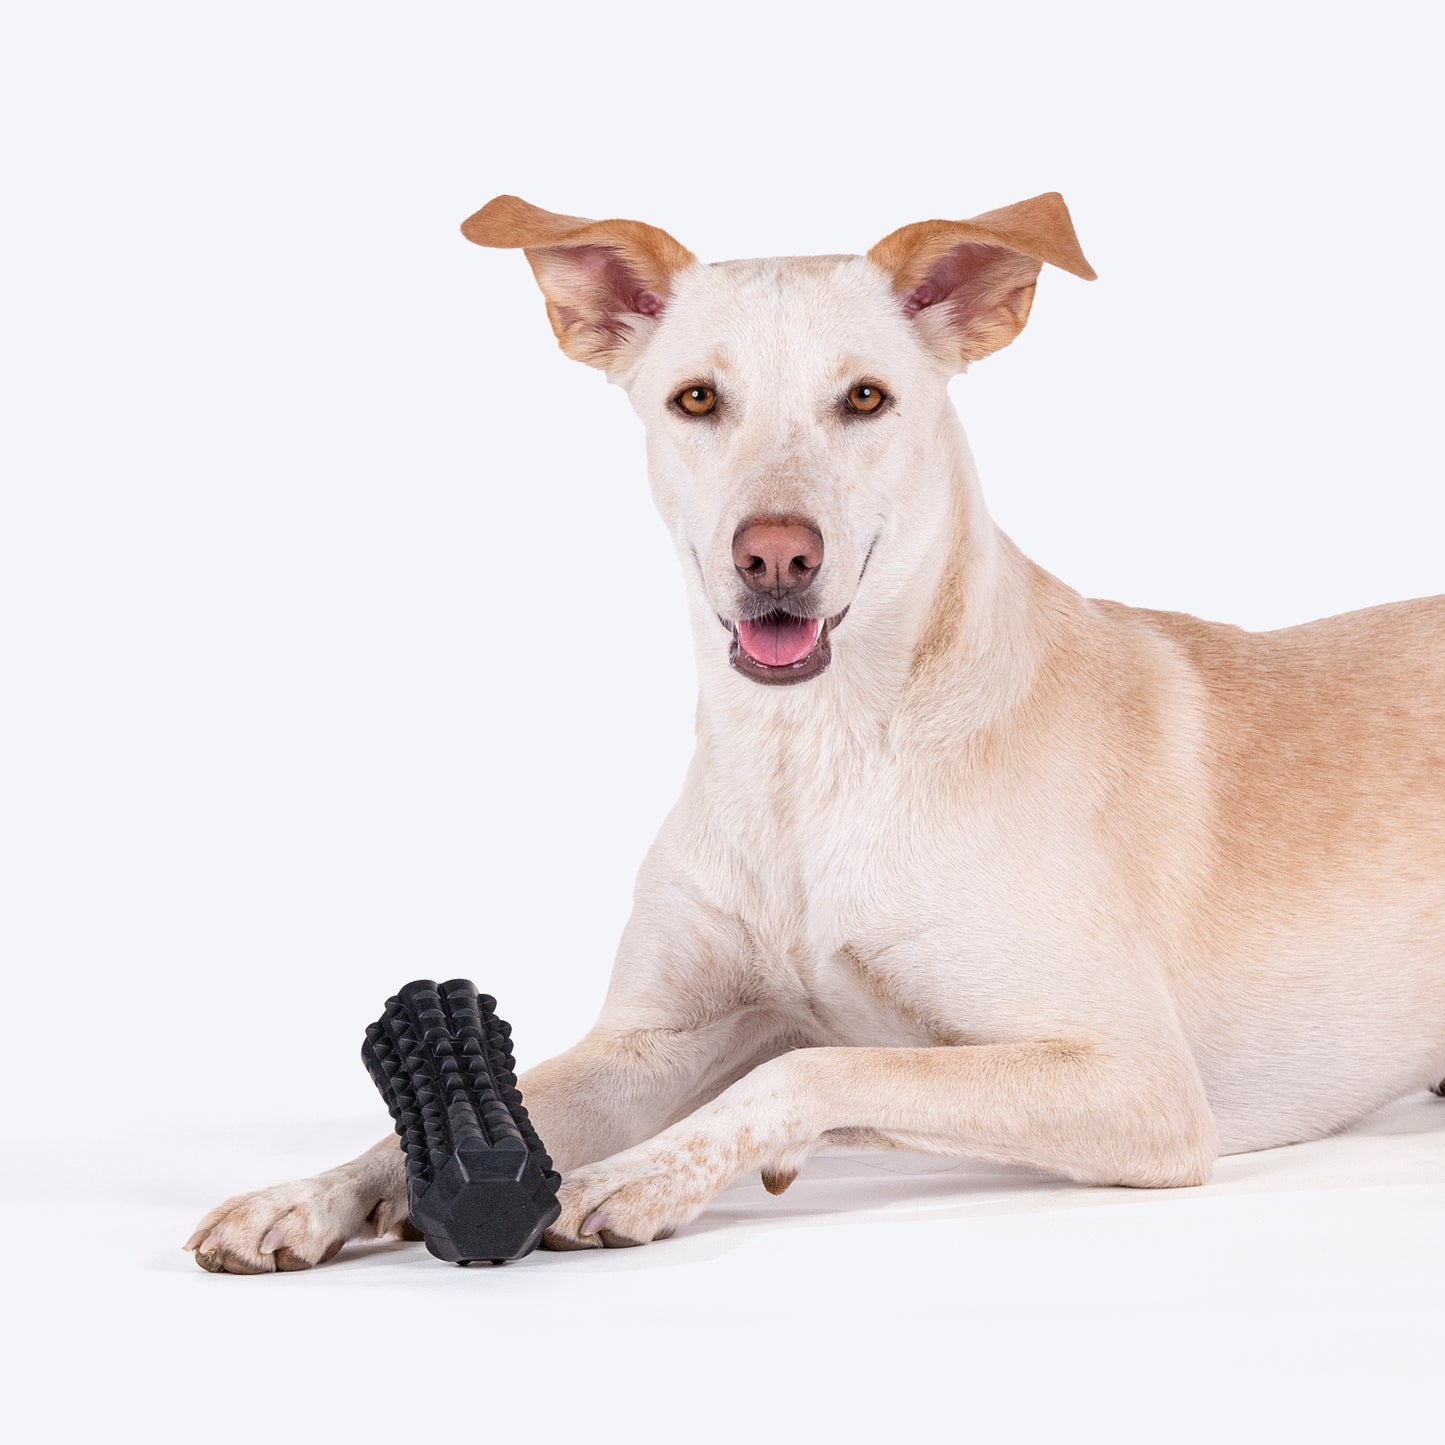 HUFT Squeak-N-Chew Toy For Dog - Black